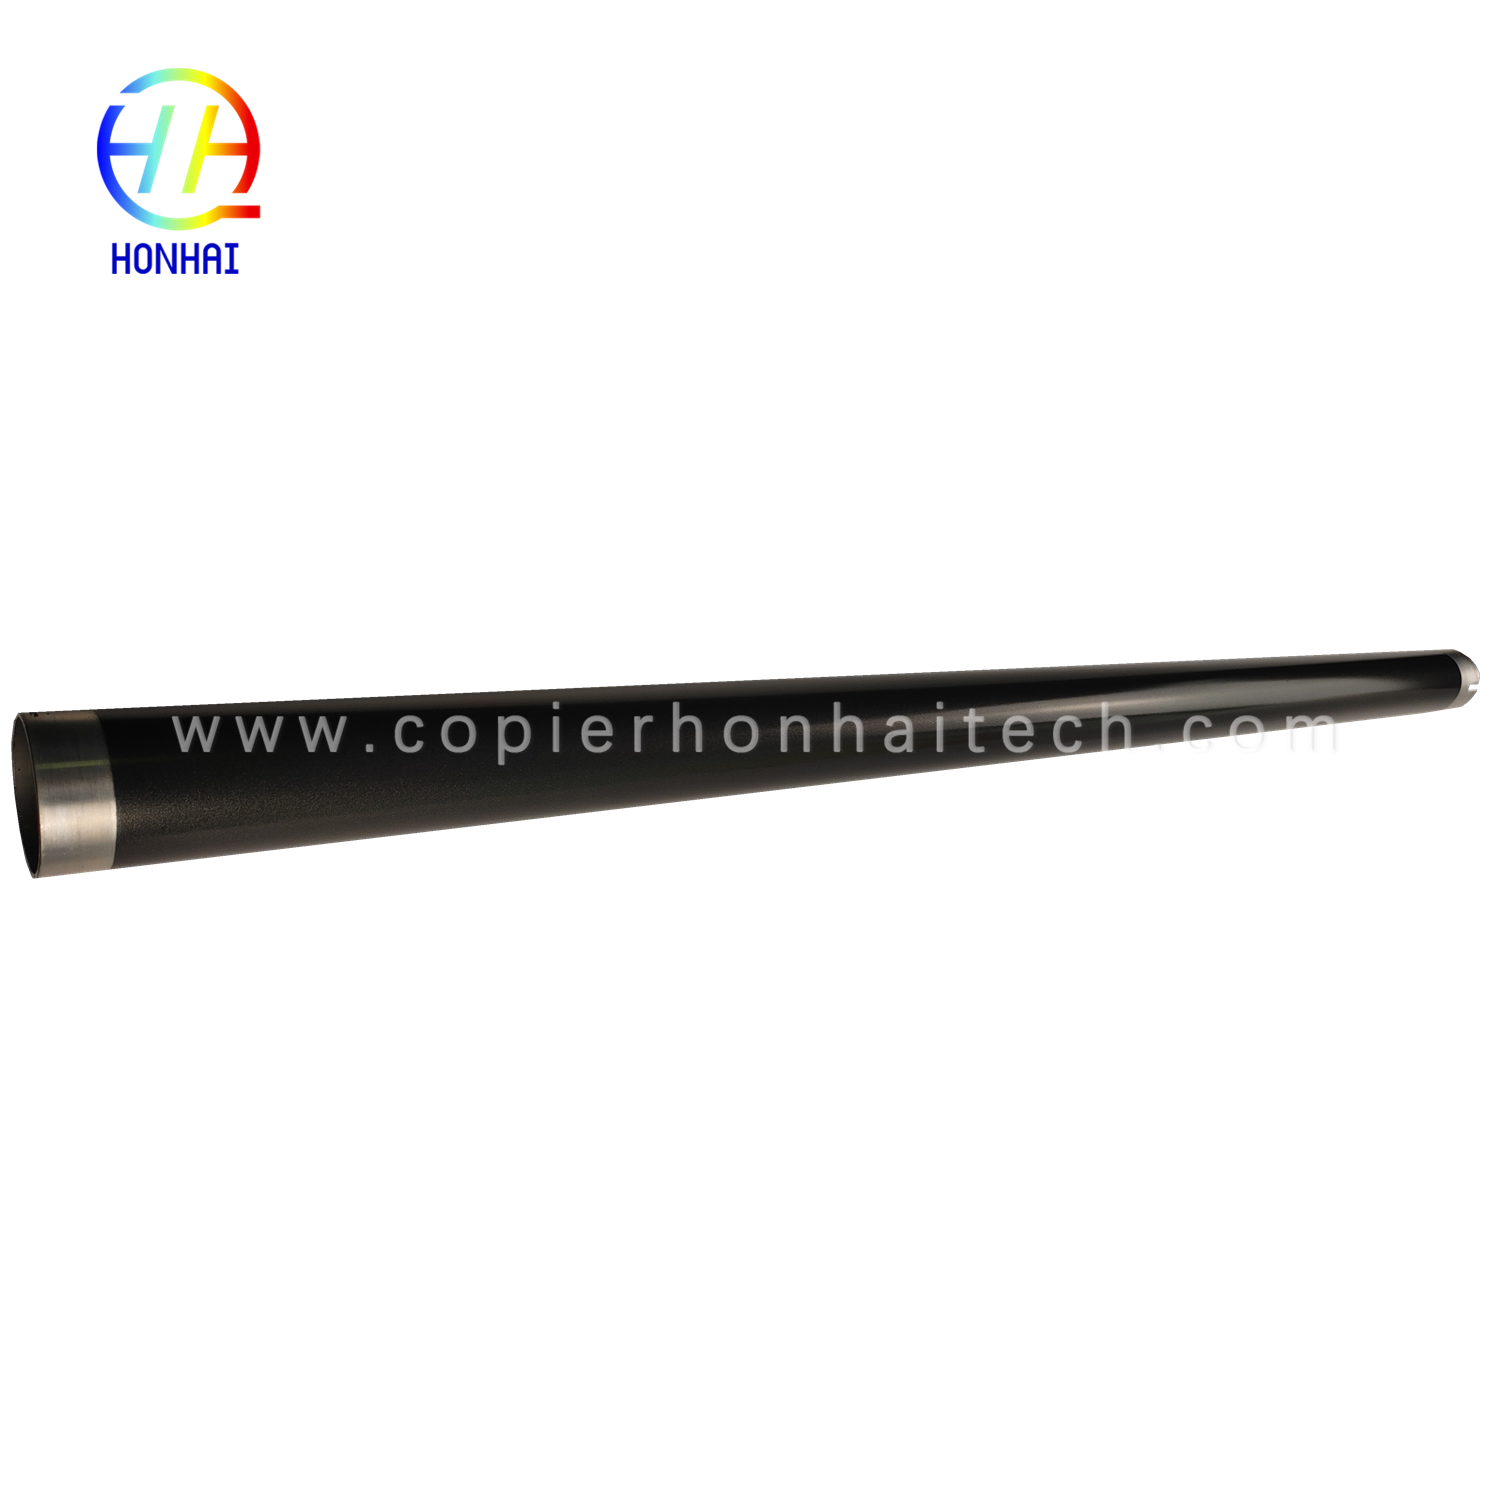 https://www.copierhonhaitech.com/upper-fuser-roller-for-ricoh-mp-w6700-product/